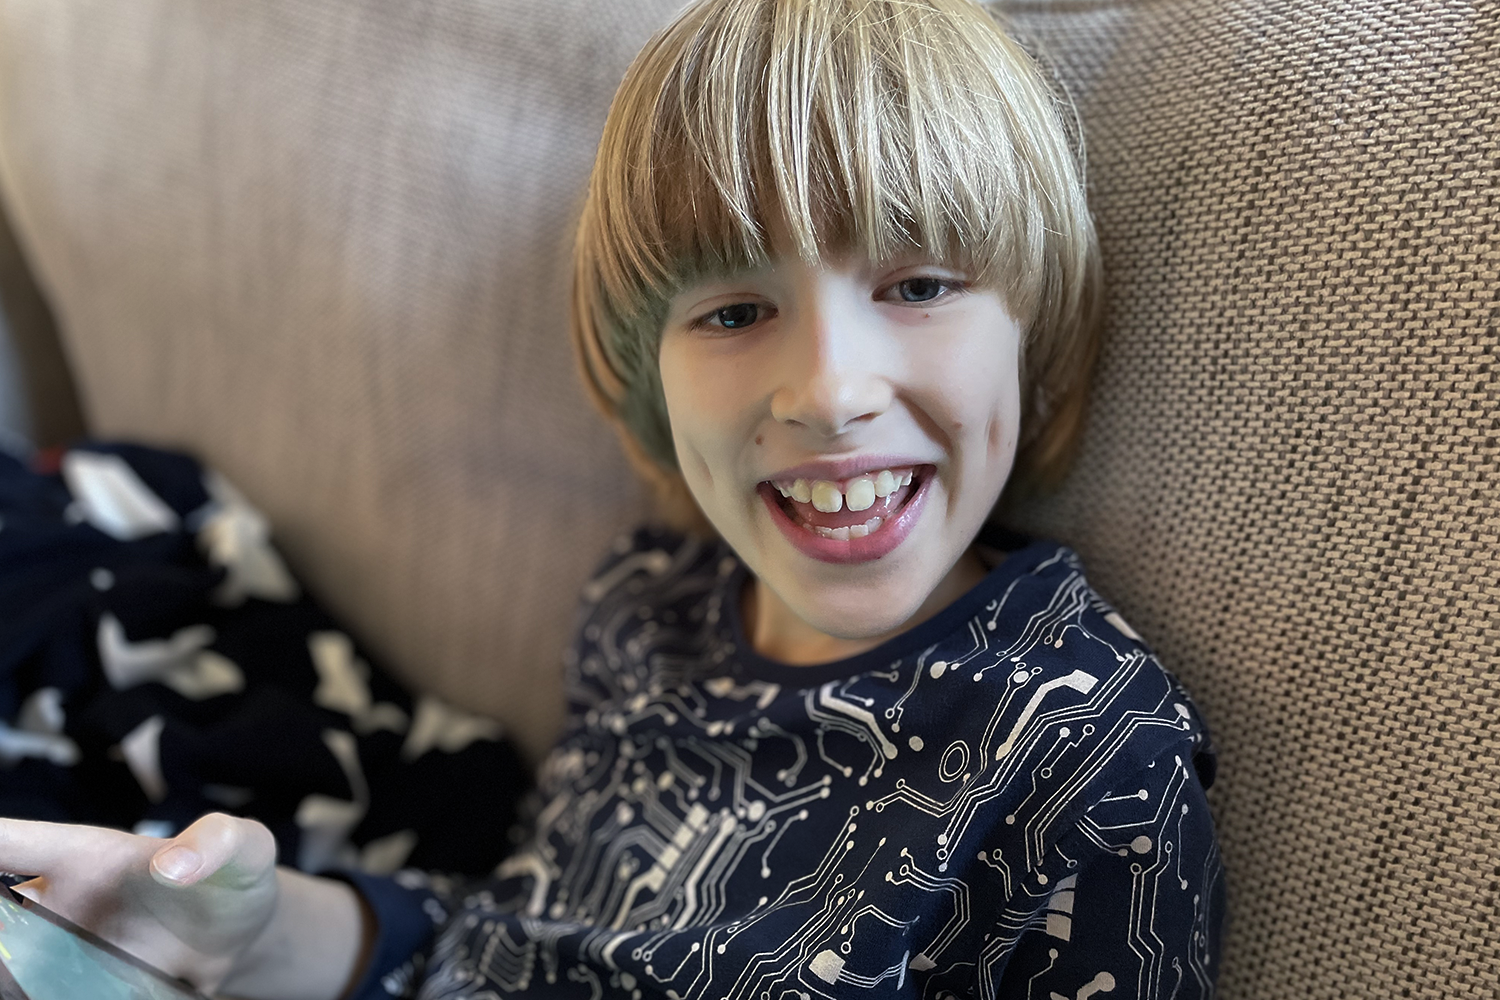 Toby wearing pyjamas and smiling at the camera